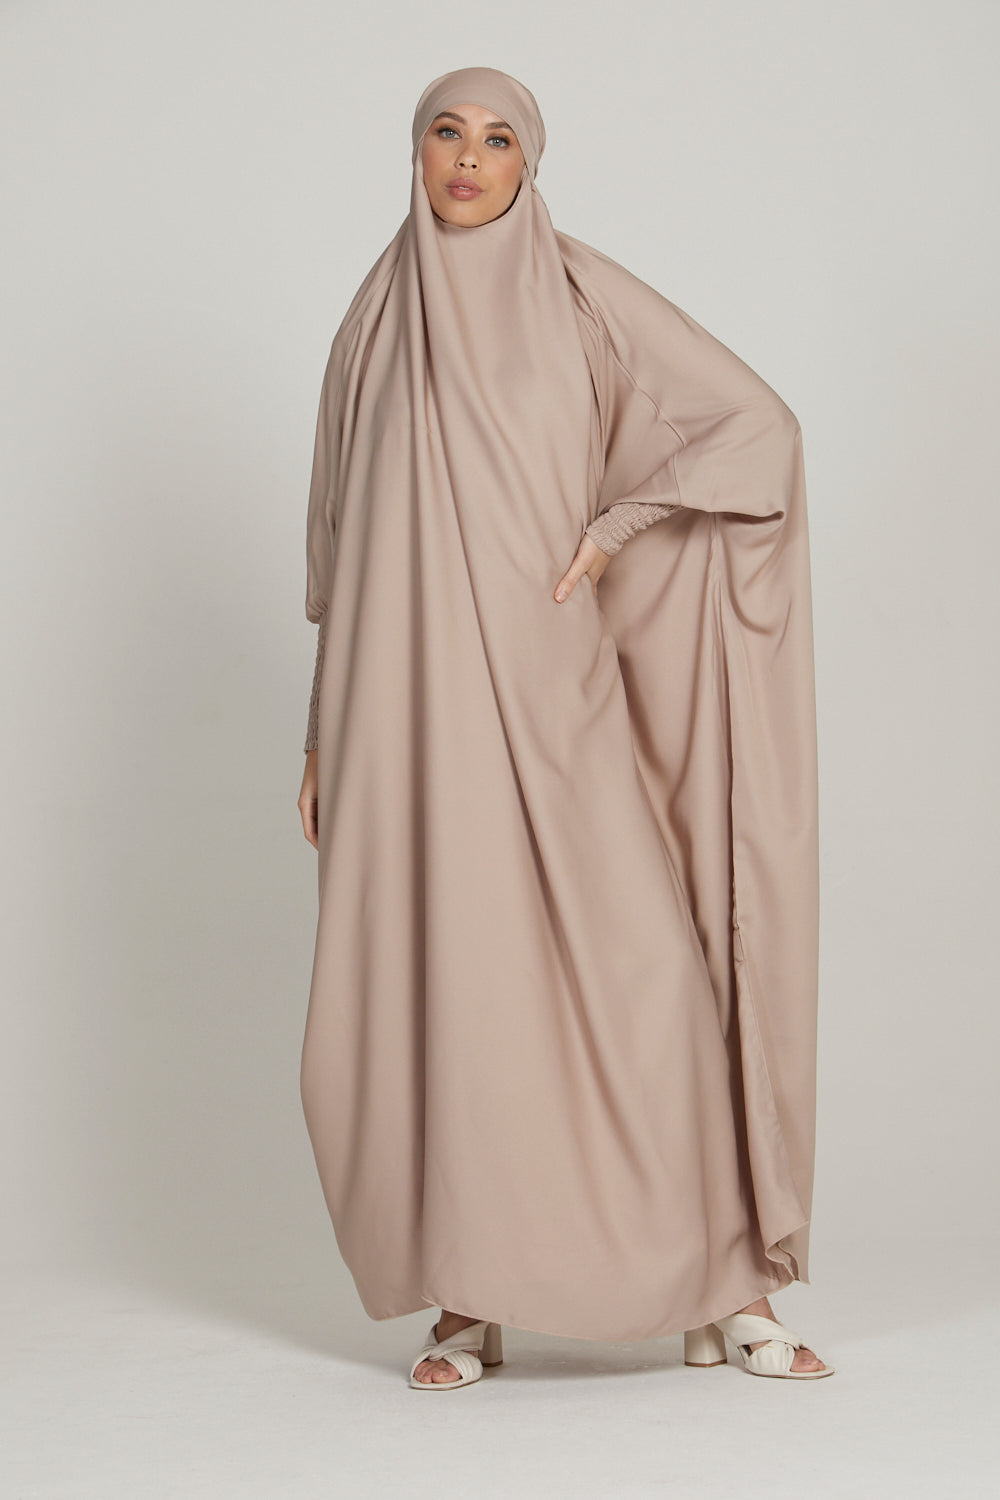 One Piece Full Length Jilbab/ Prayer Abaya - Nude